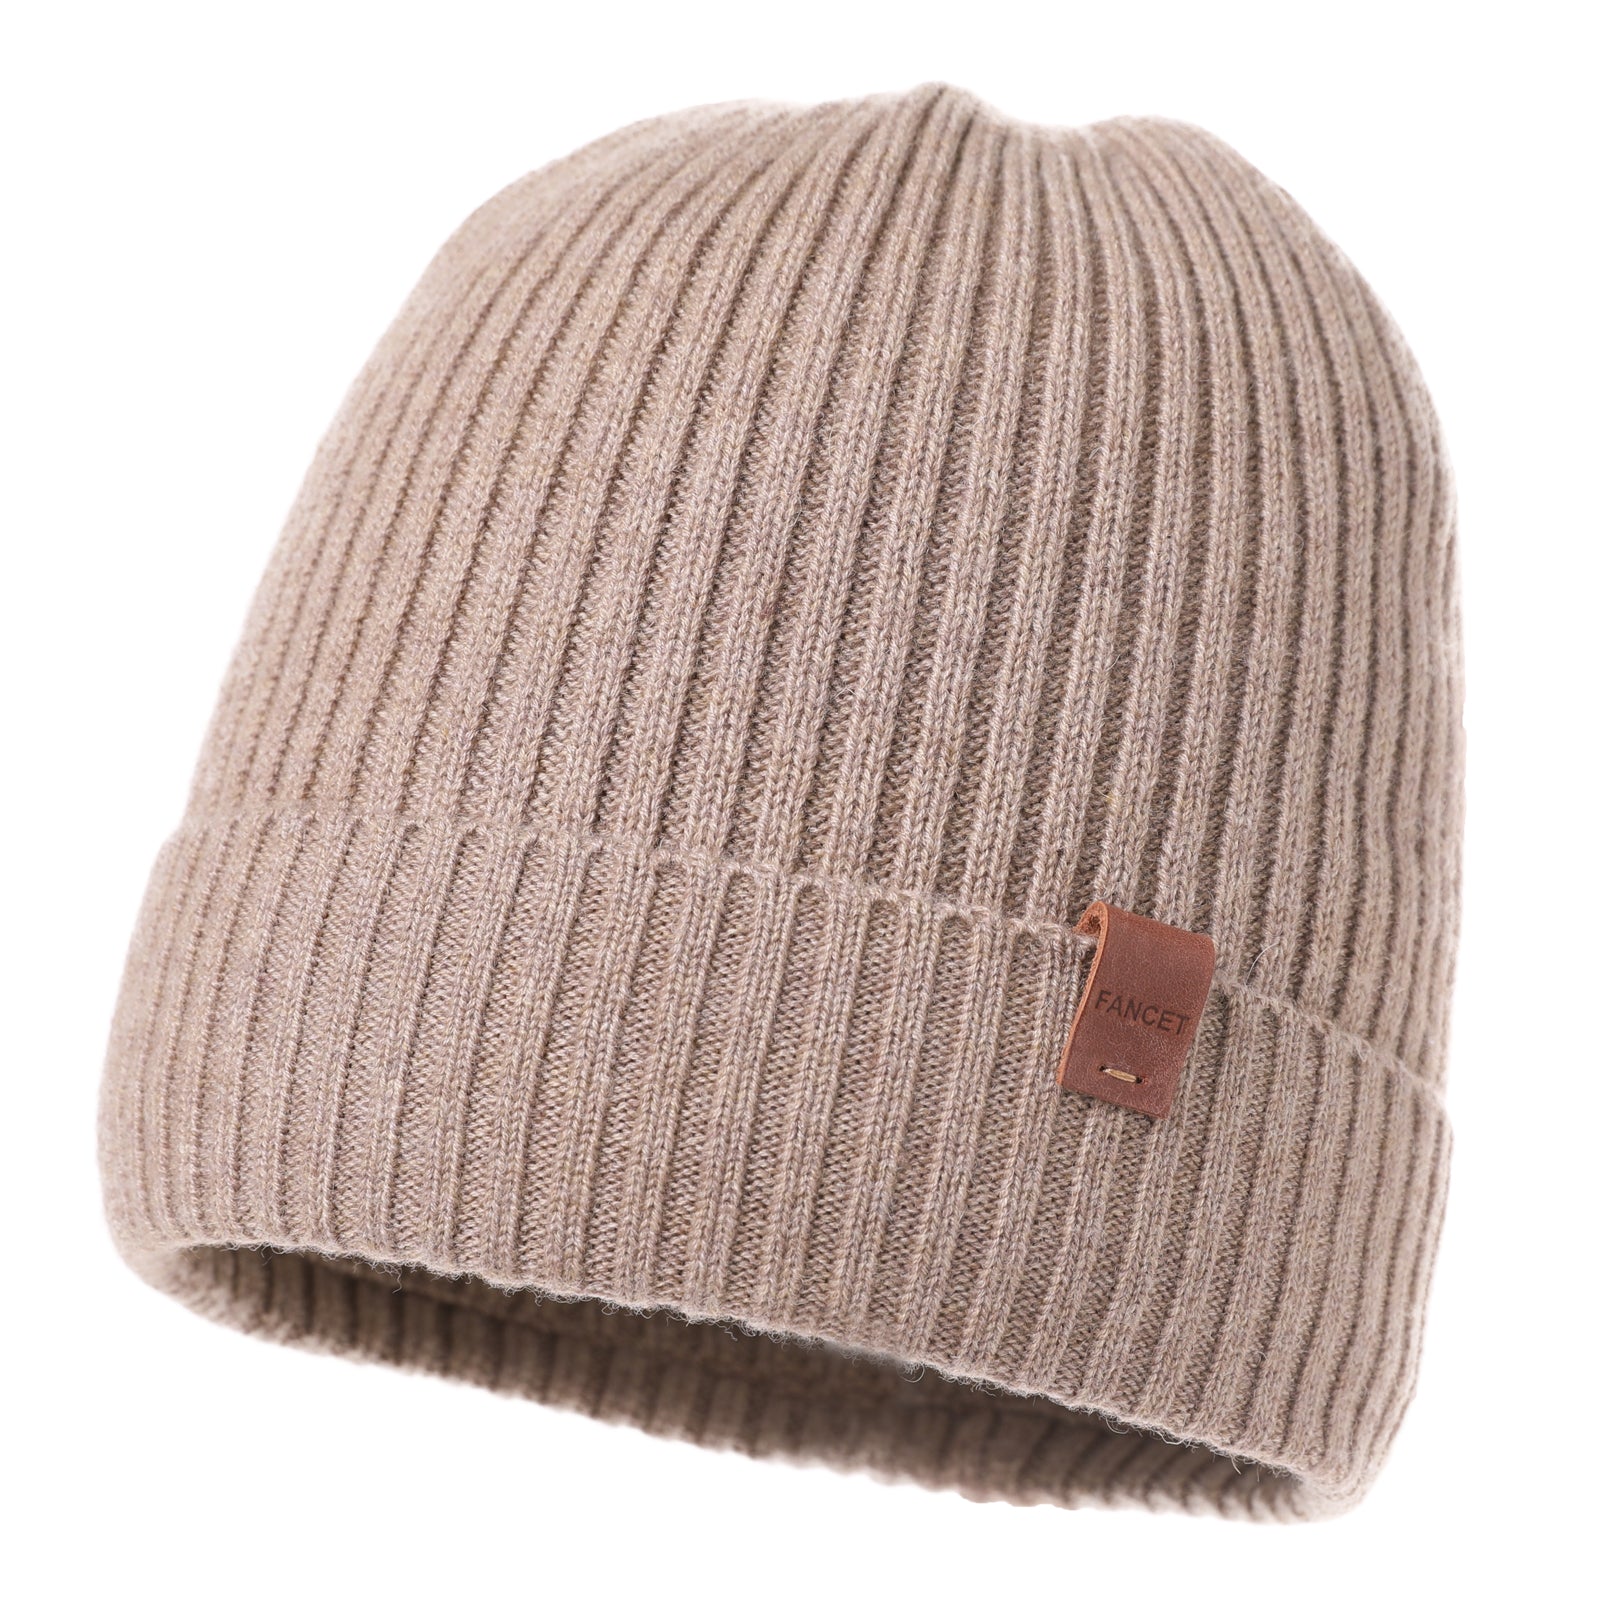 Winter Beanie Hat Mens 46% Merino Wool Hats for Women Golf Running Skiing Walking Warm Gifts for Xmas